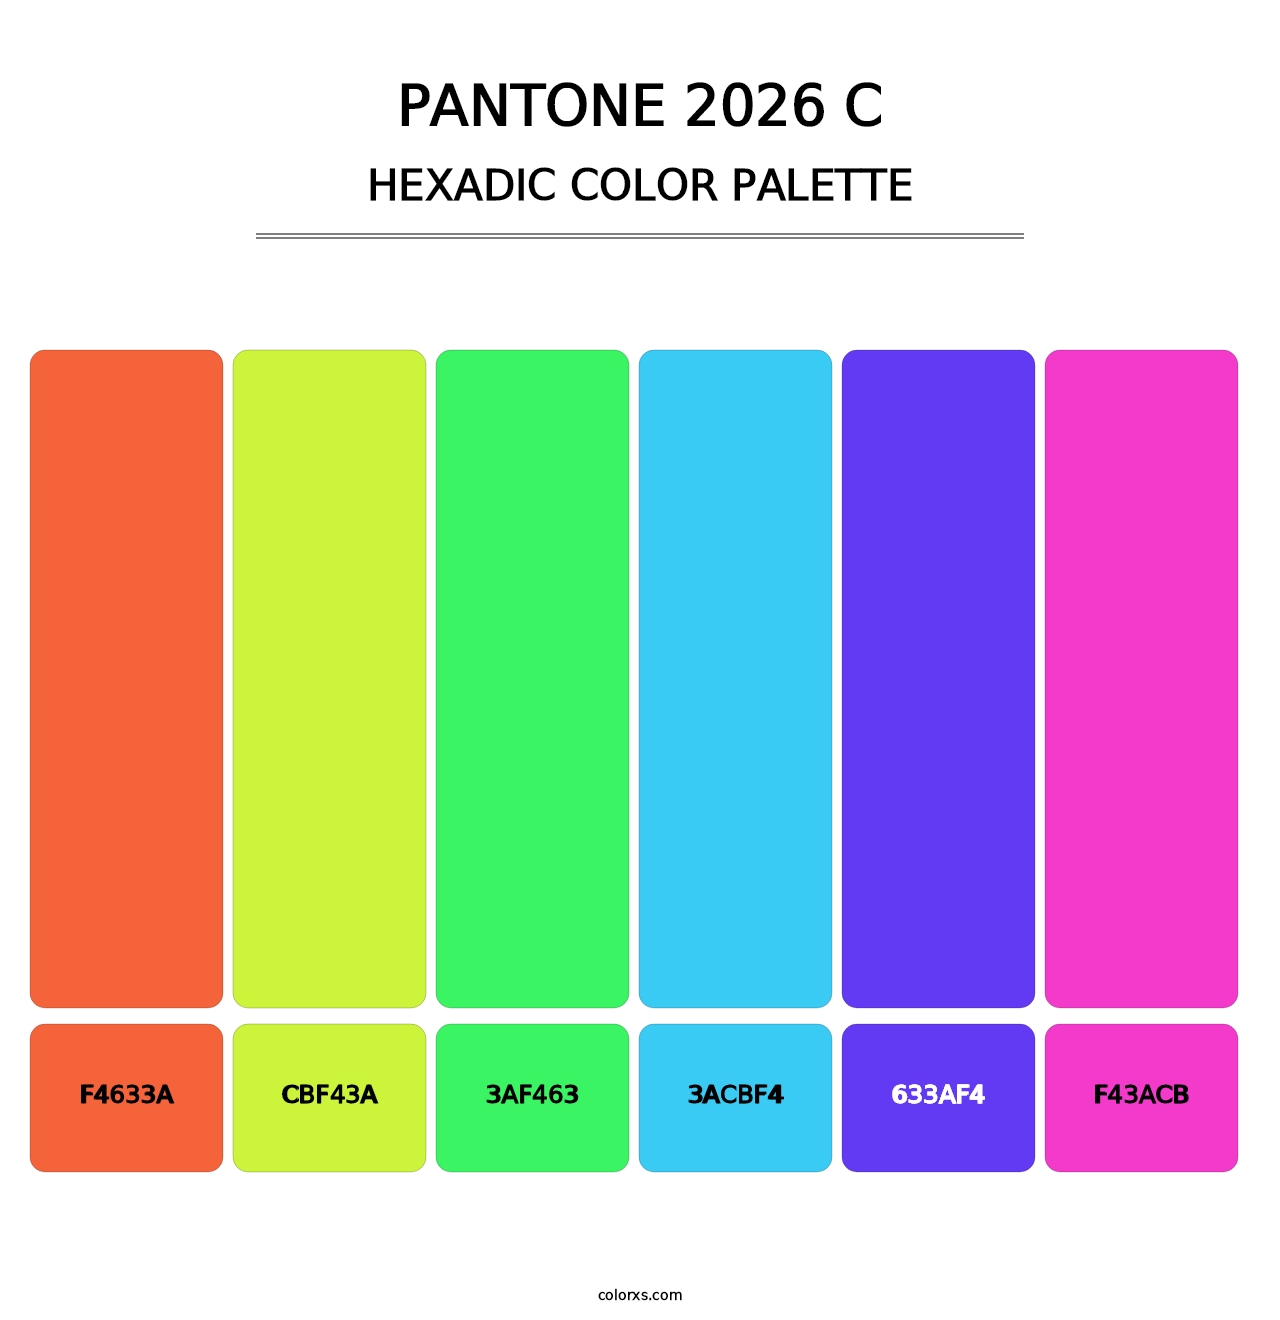 PANTONE 2026 C - Hexadic Color Palette